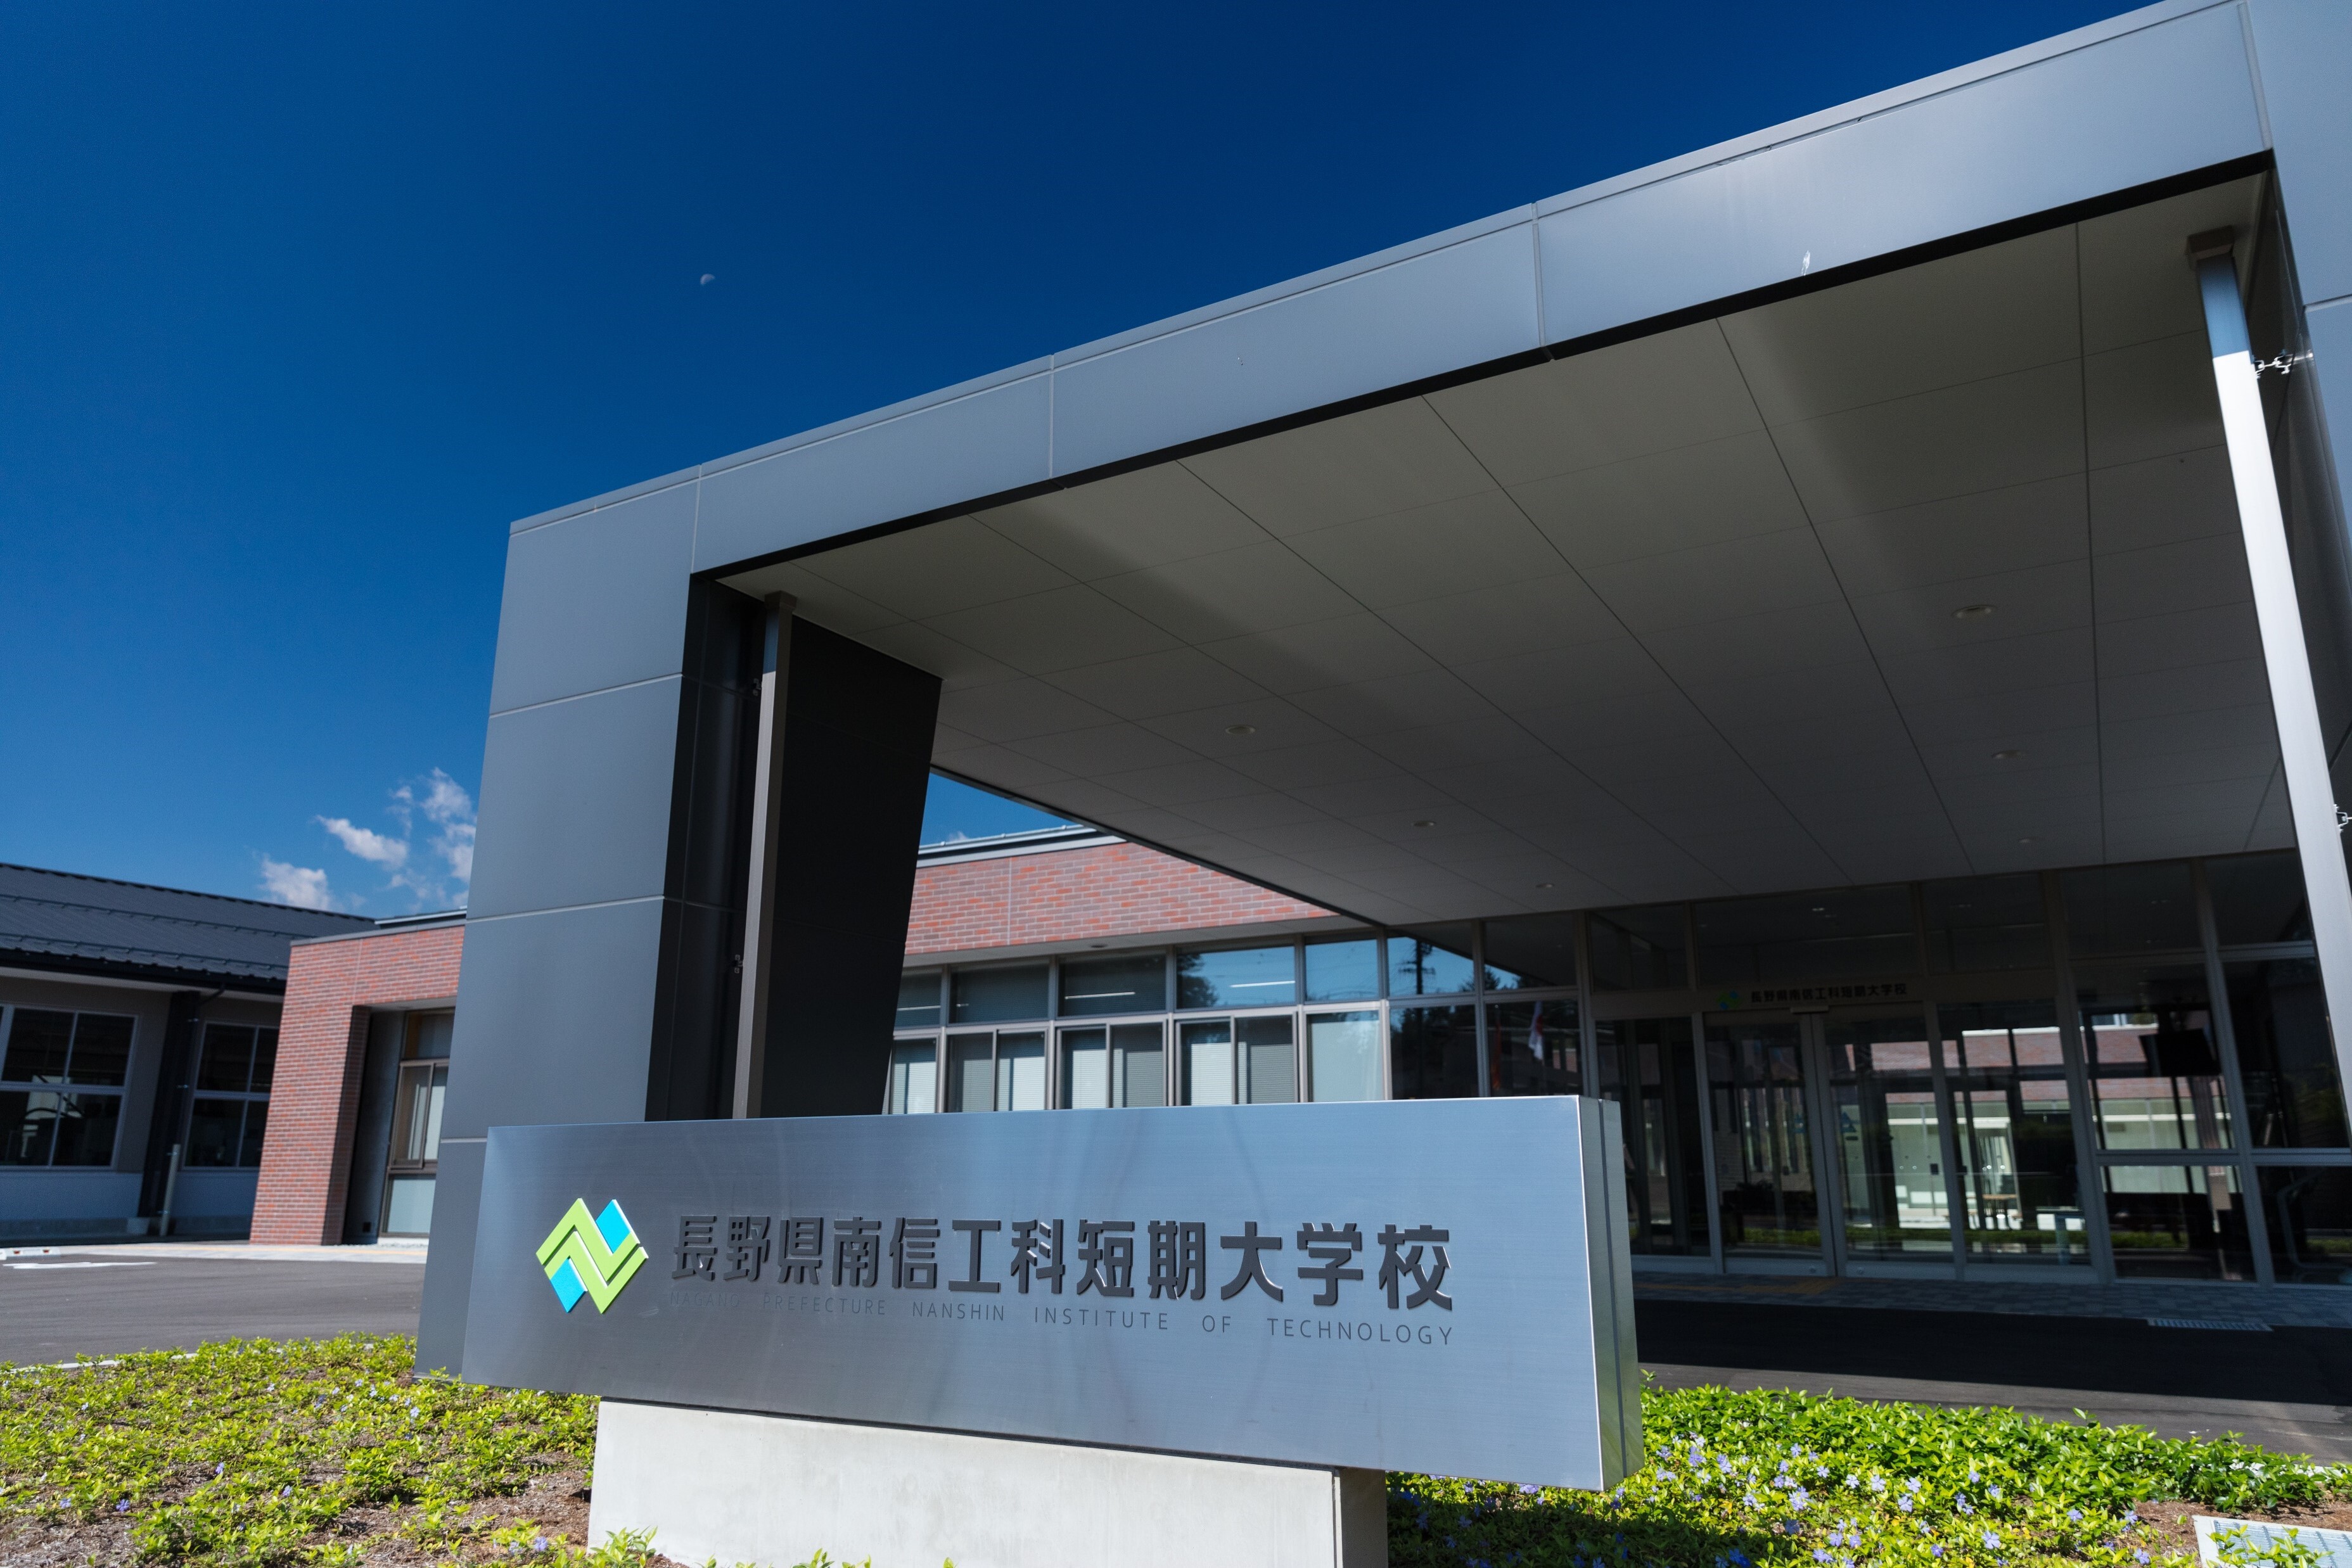 Nagano Prefecture Nanshin Institute of Technology